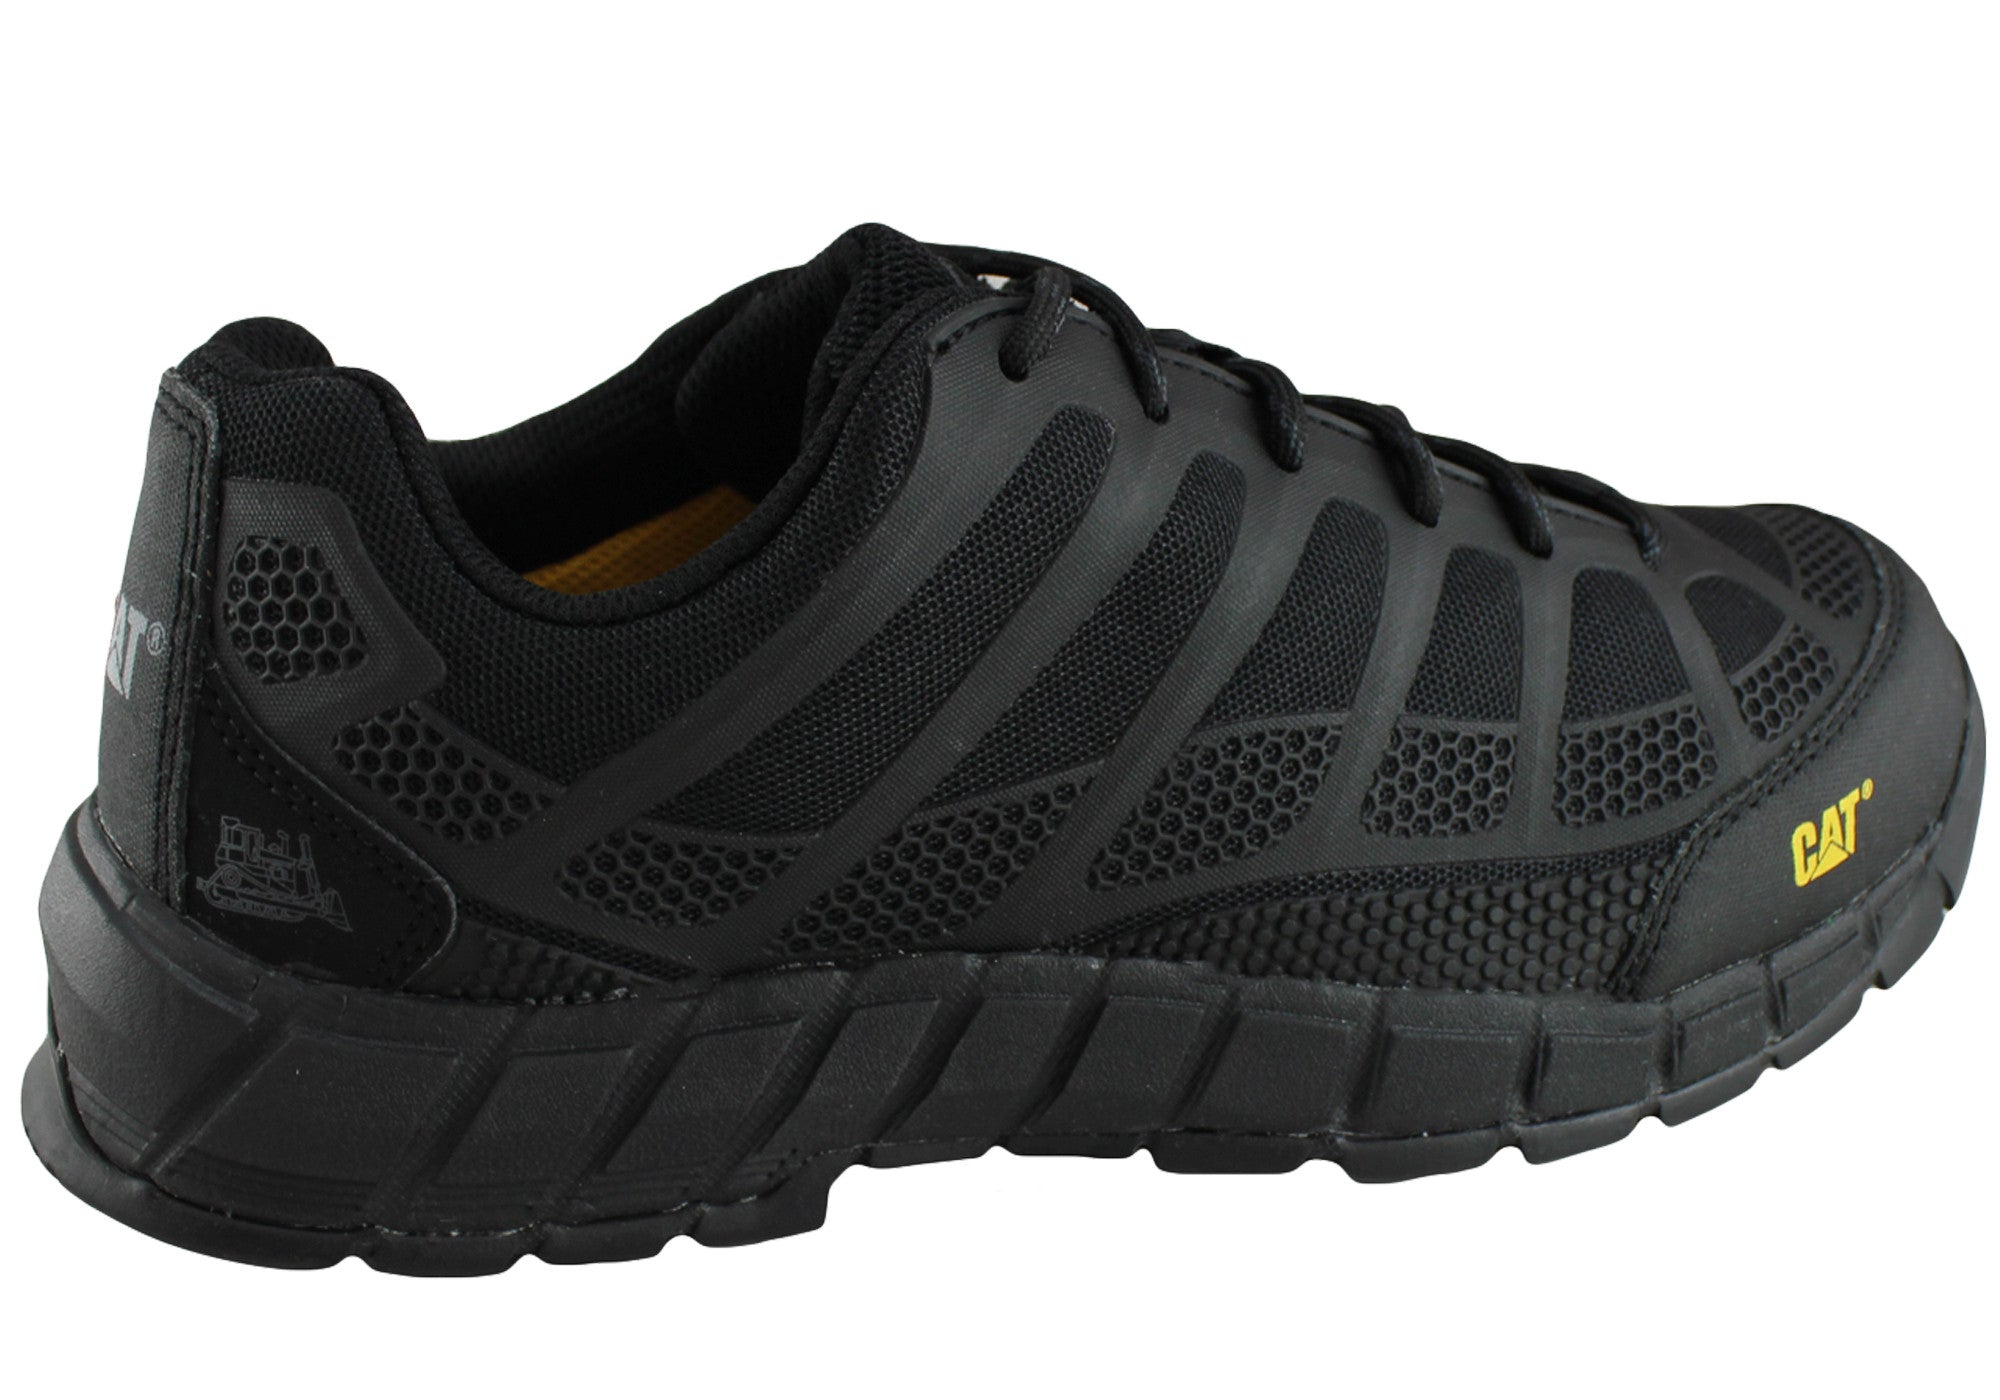 Caterpillar Streamline Composite Toe Mens Work/Safety Shoes | Brand ...